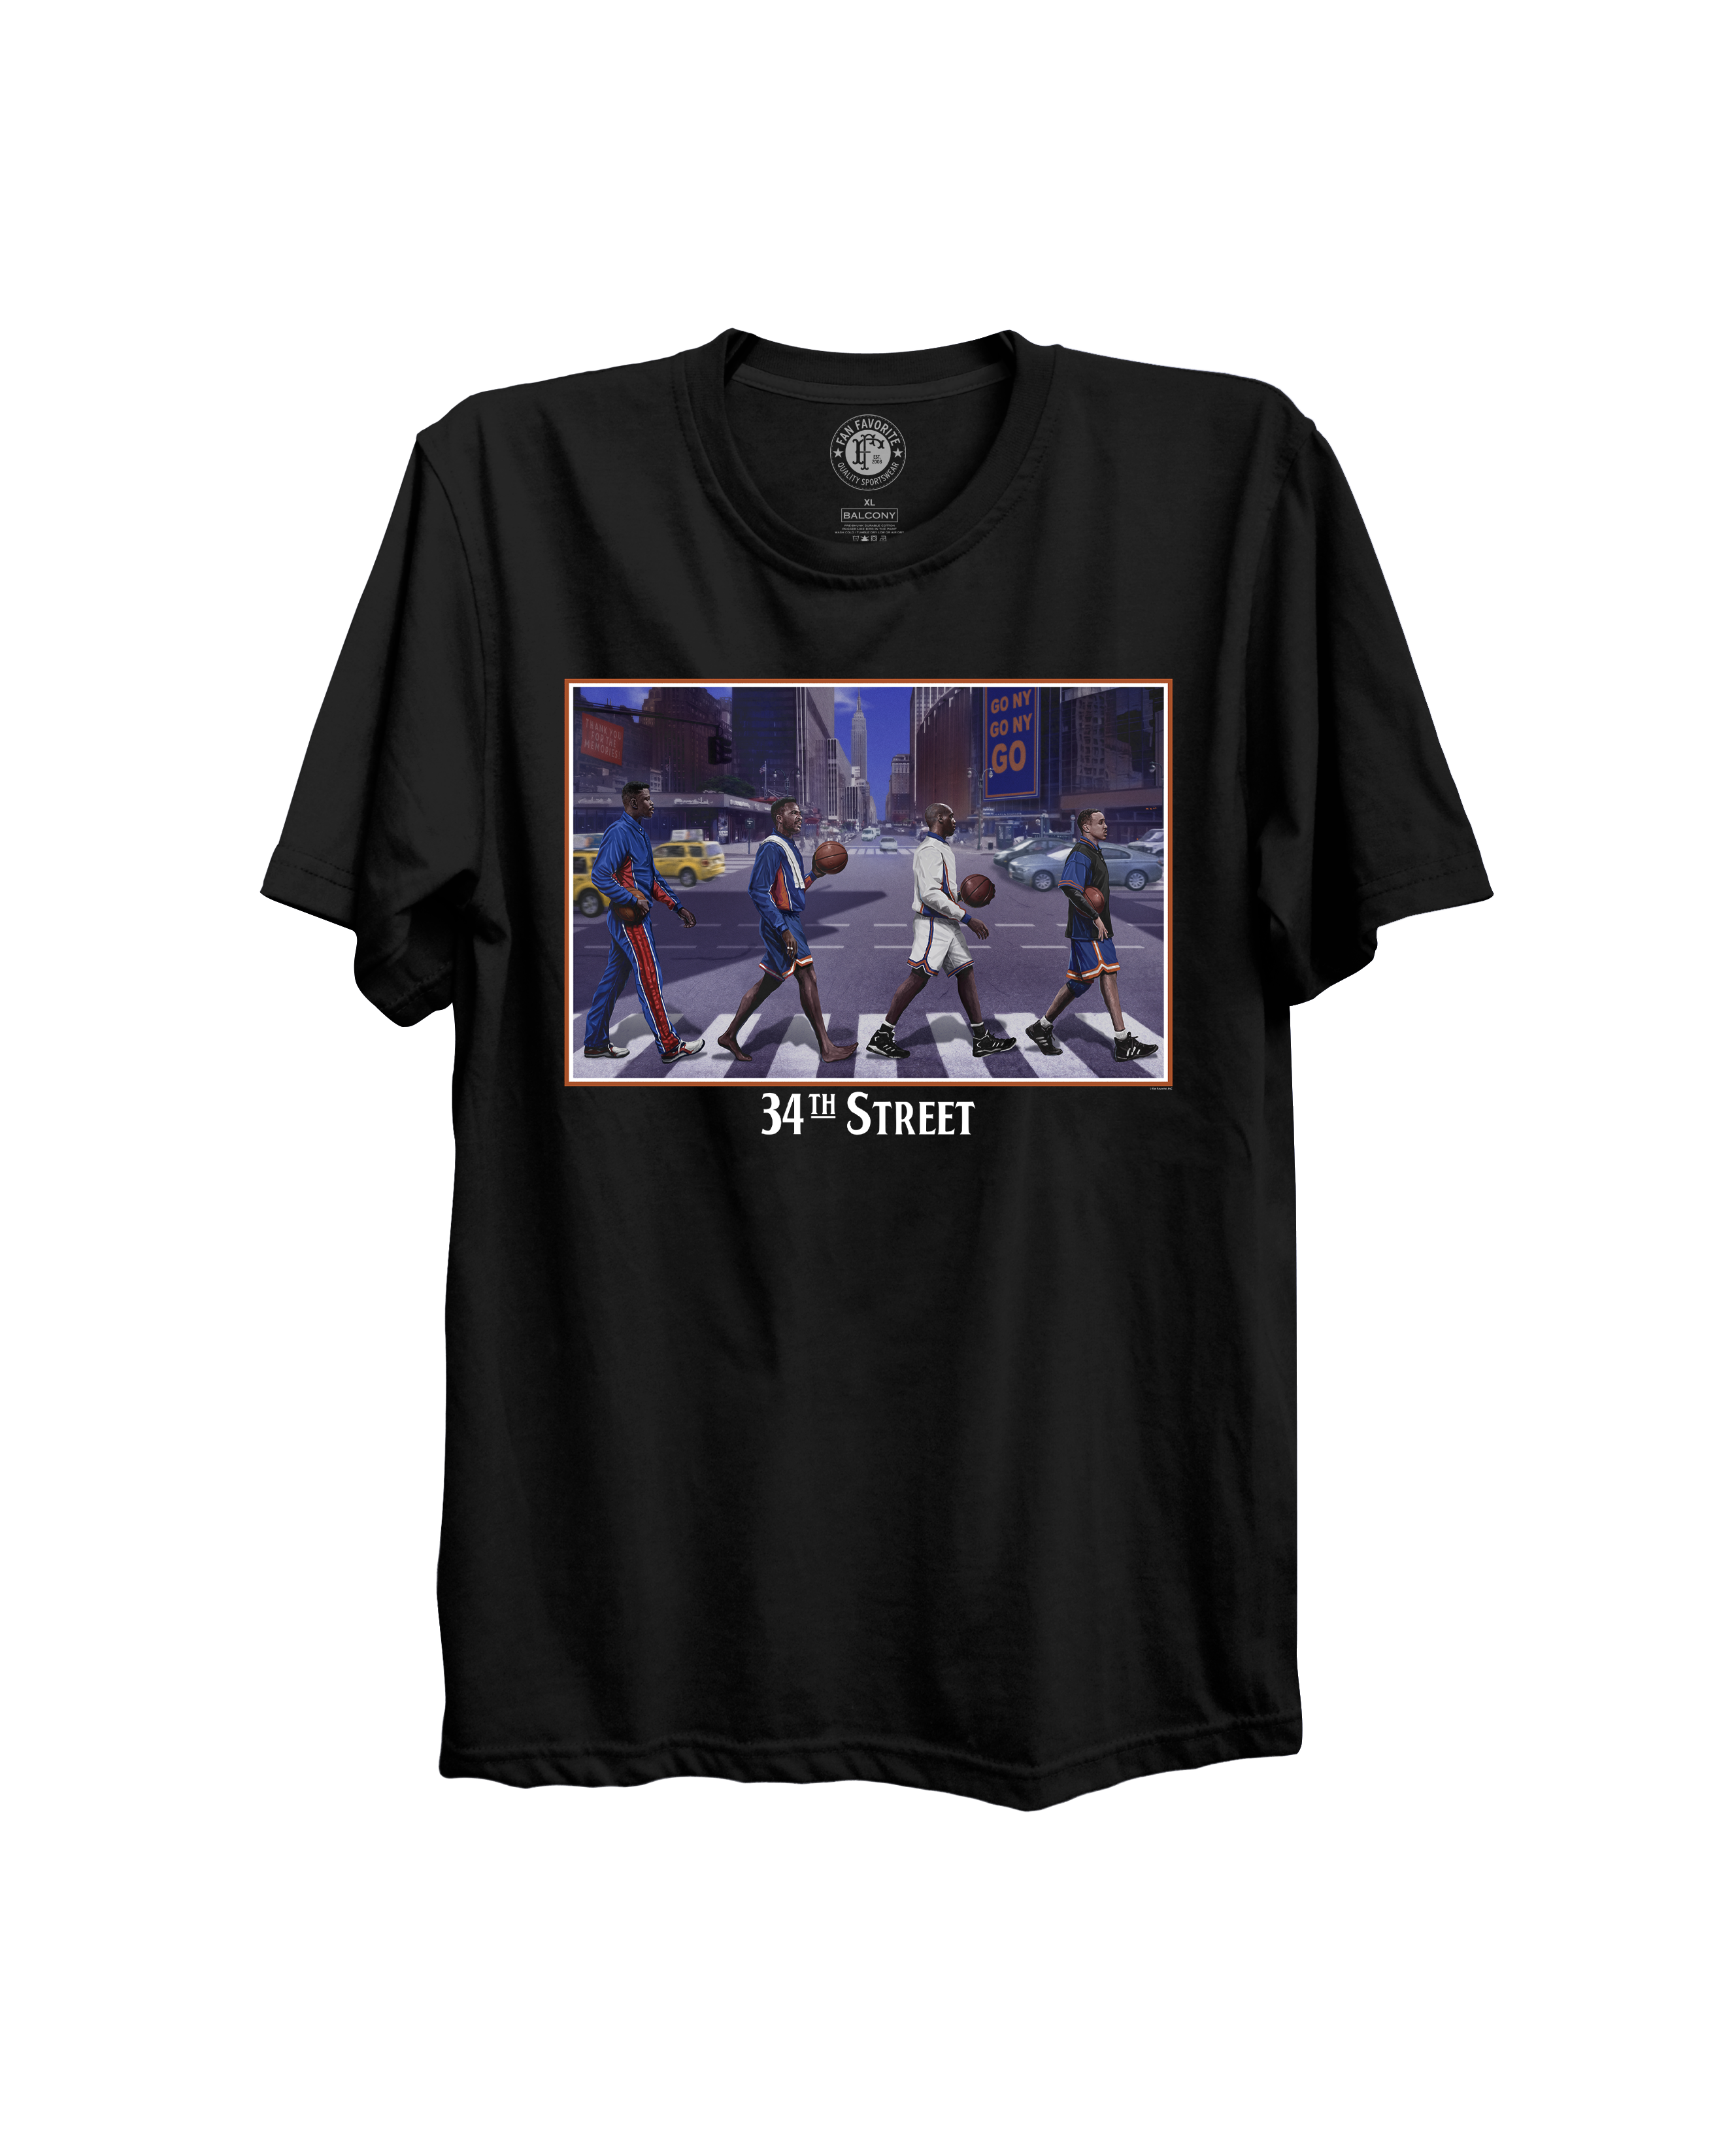 34th Street (Basketball) T-Shirt